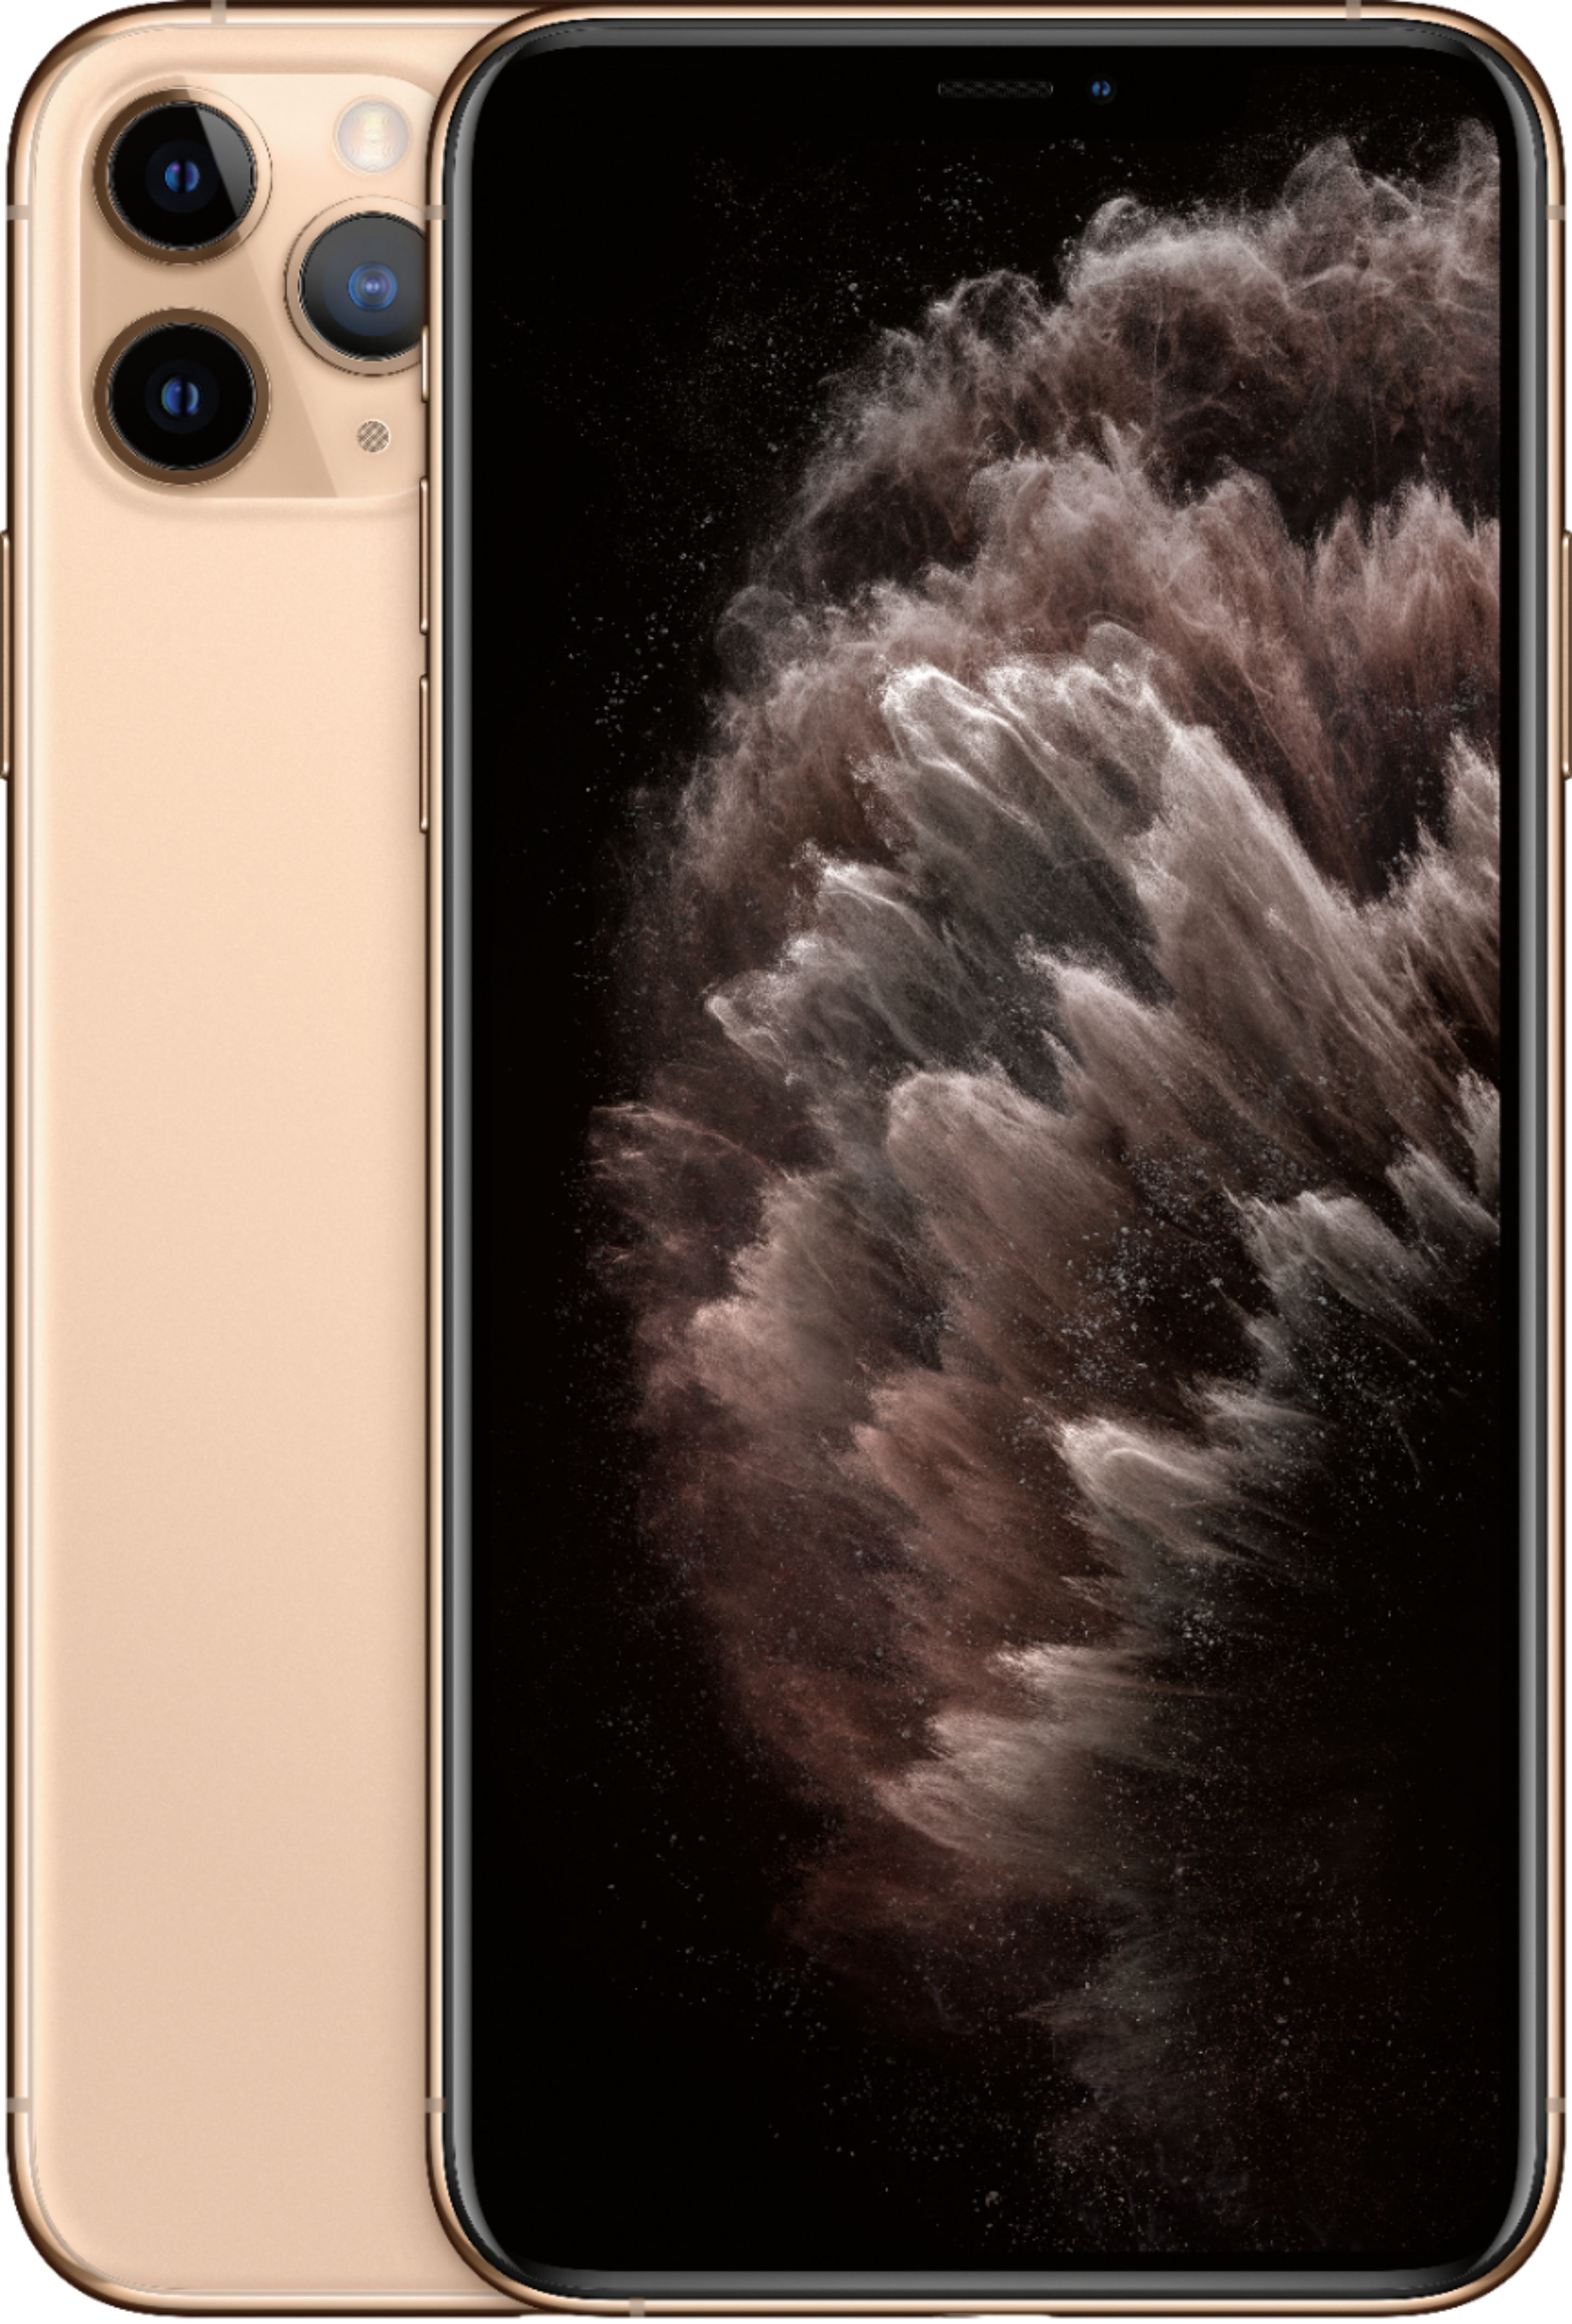 Apple Iphone 11 Pro Max 256gb Gold Verizon Mwh62ll A Best Buy